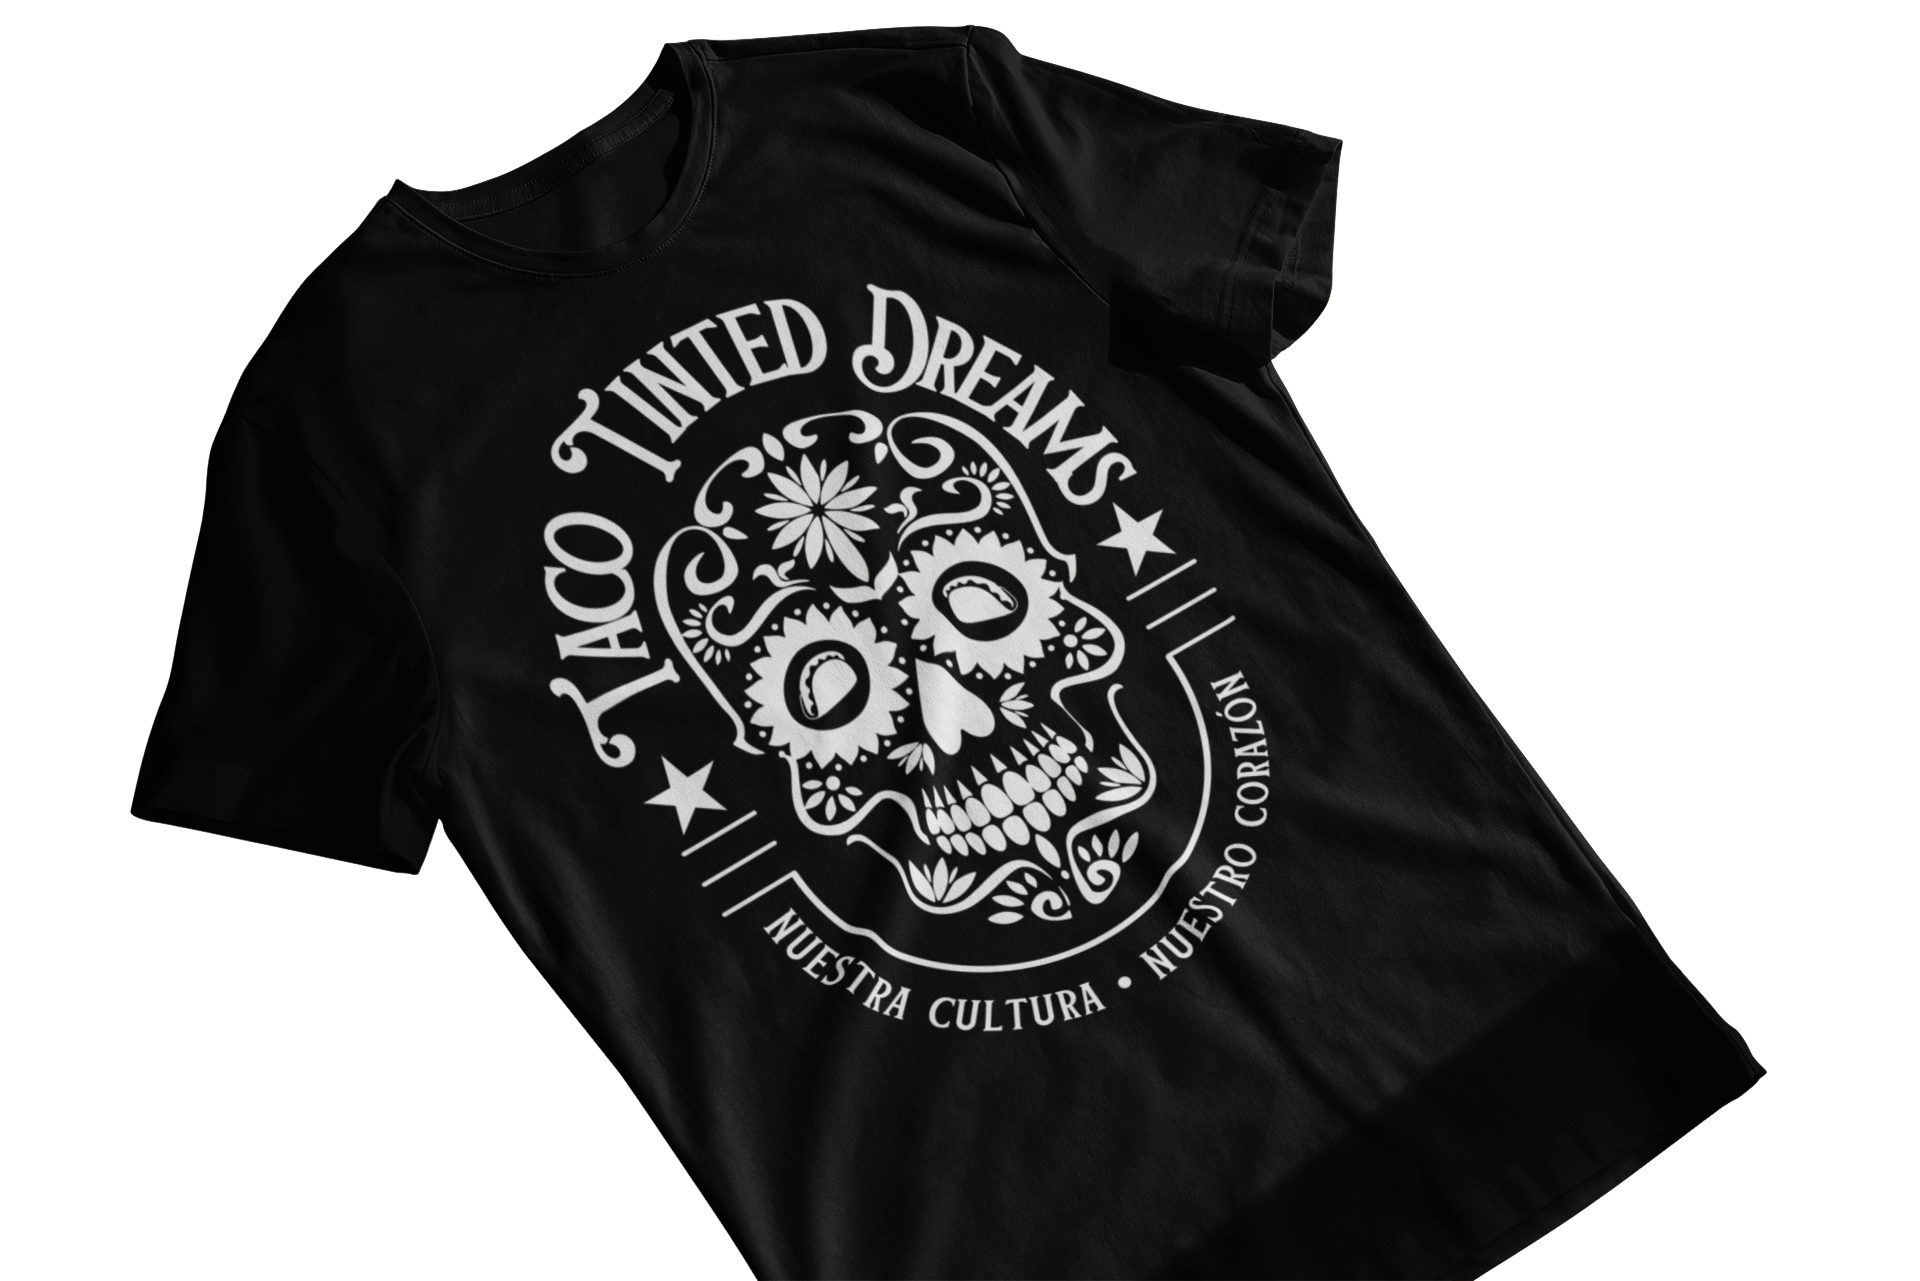 T-shirt with tattoo-style Mexican sugar skull calavera logo and text "taco tinted dreams" and "nuestra cultura, nuestro corazon"